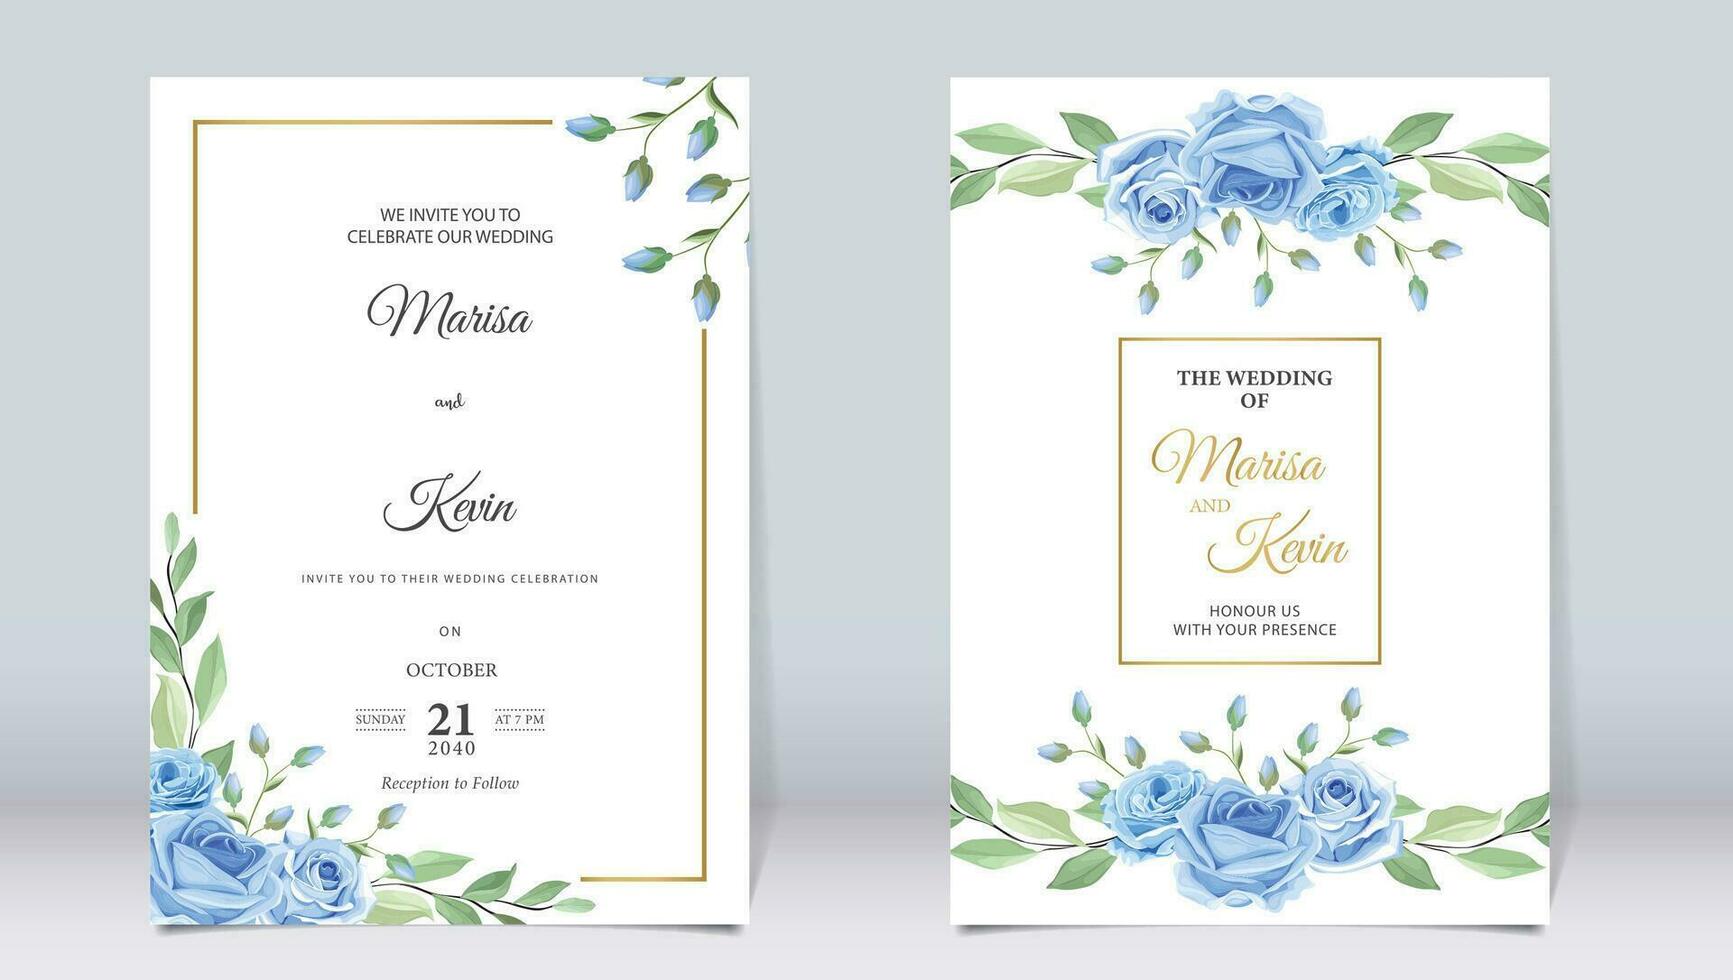 elegante azul floral Casamento convite com minimalista Projeto vetor